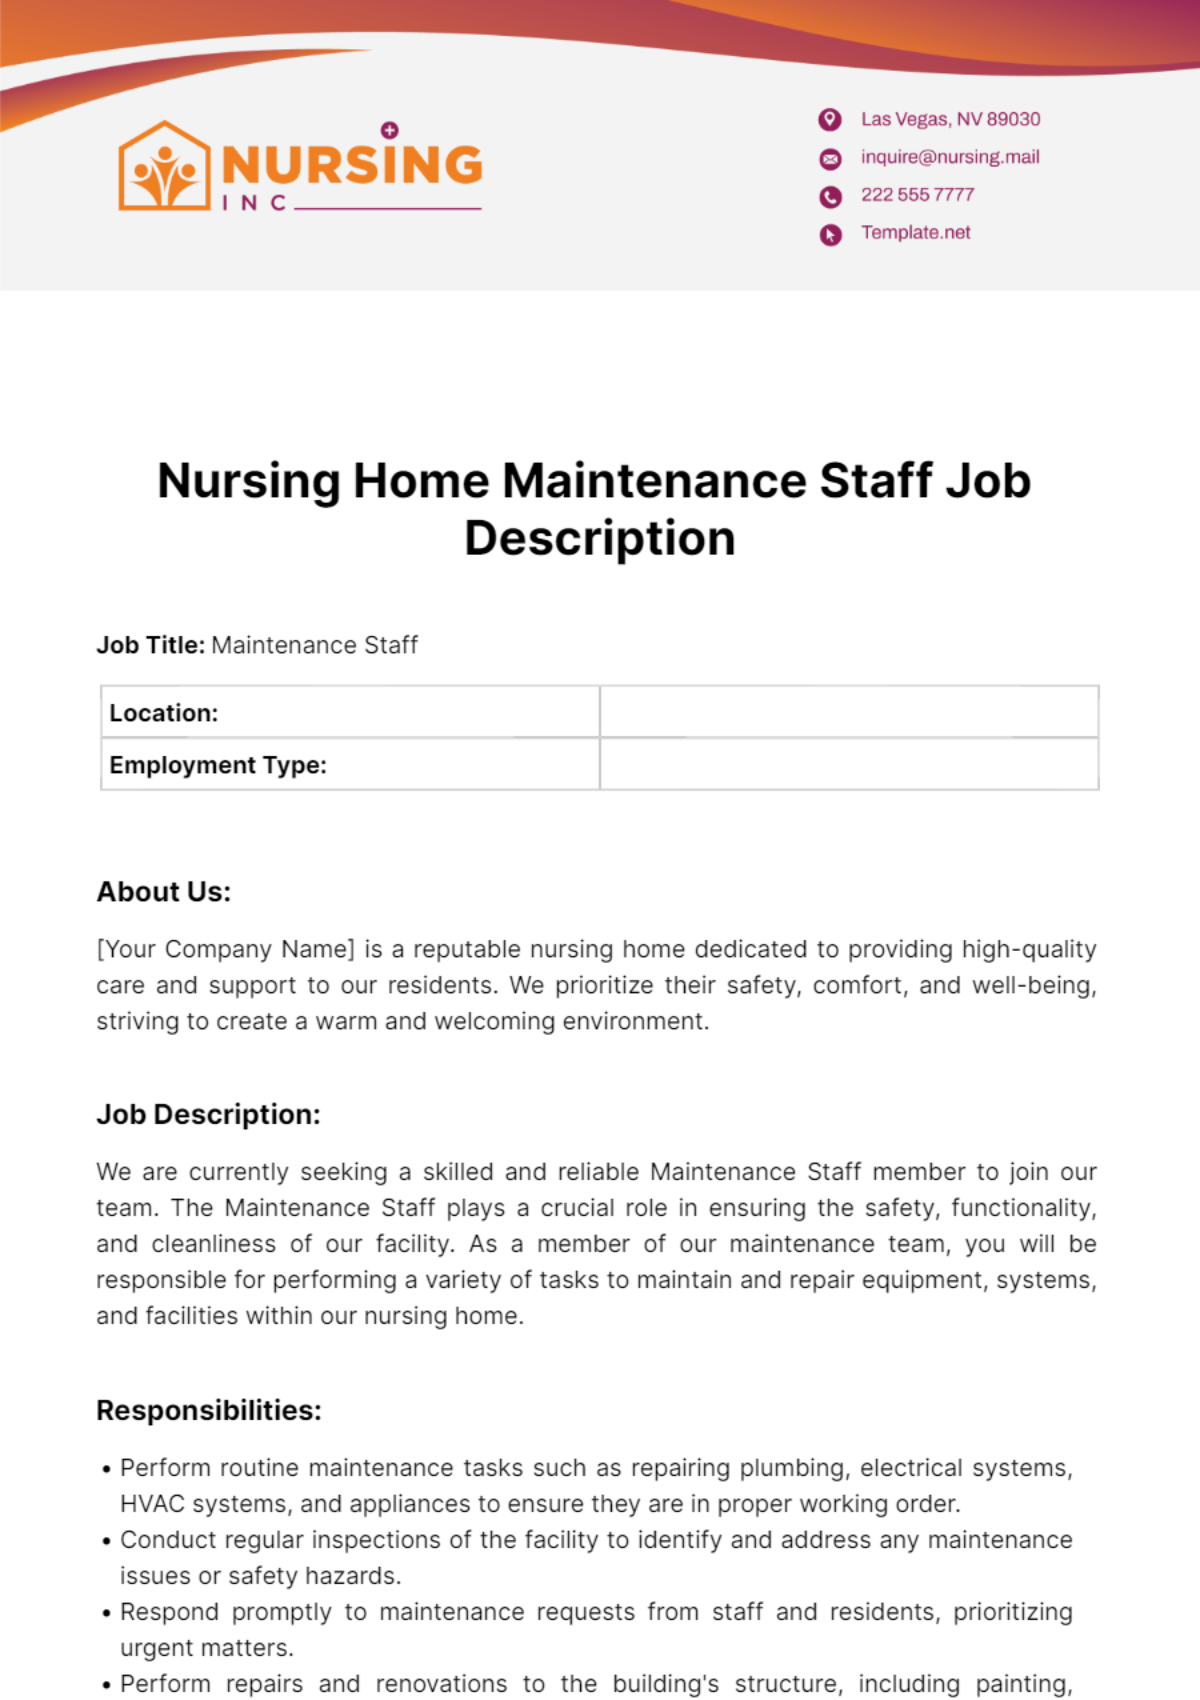 Nursing Home Maintenance Staff Job Description Template